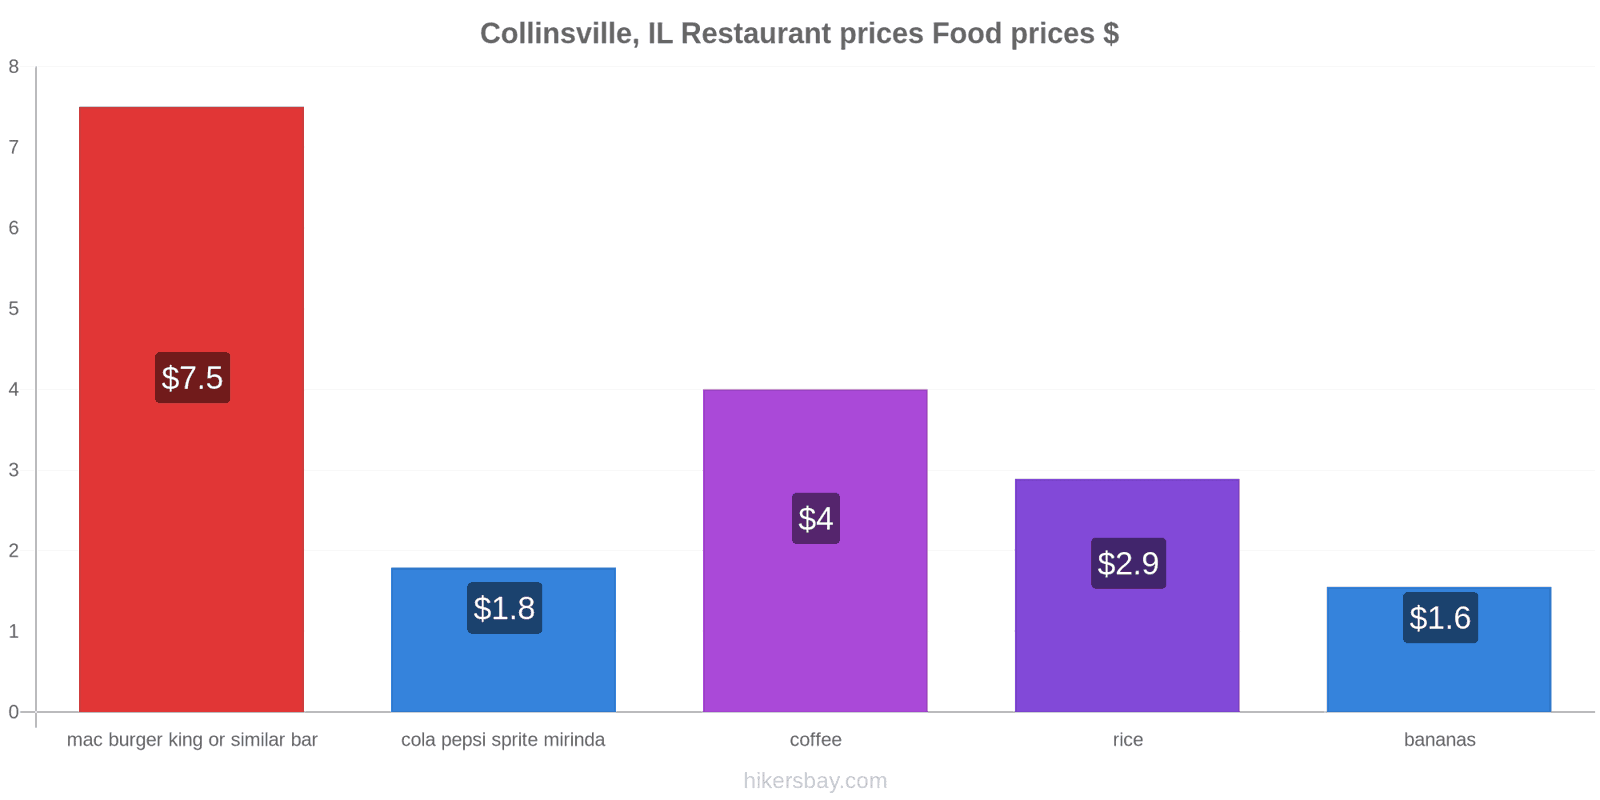 Collinsville, IL price changes hikersbay.com